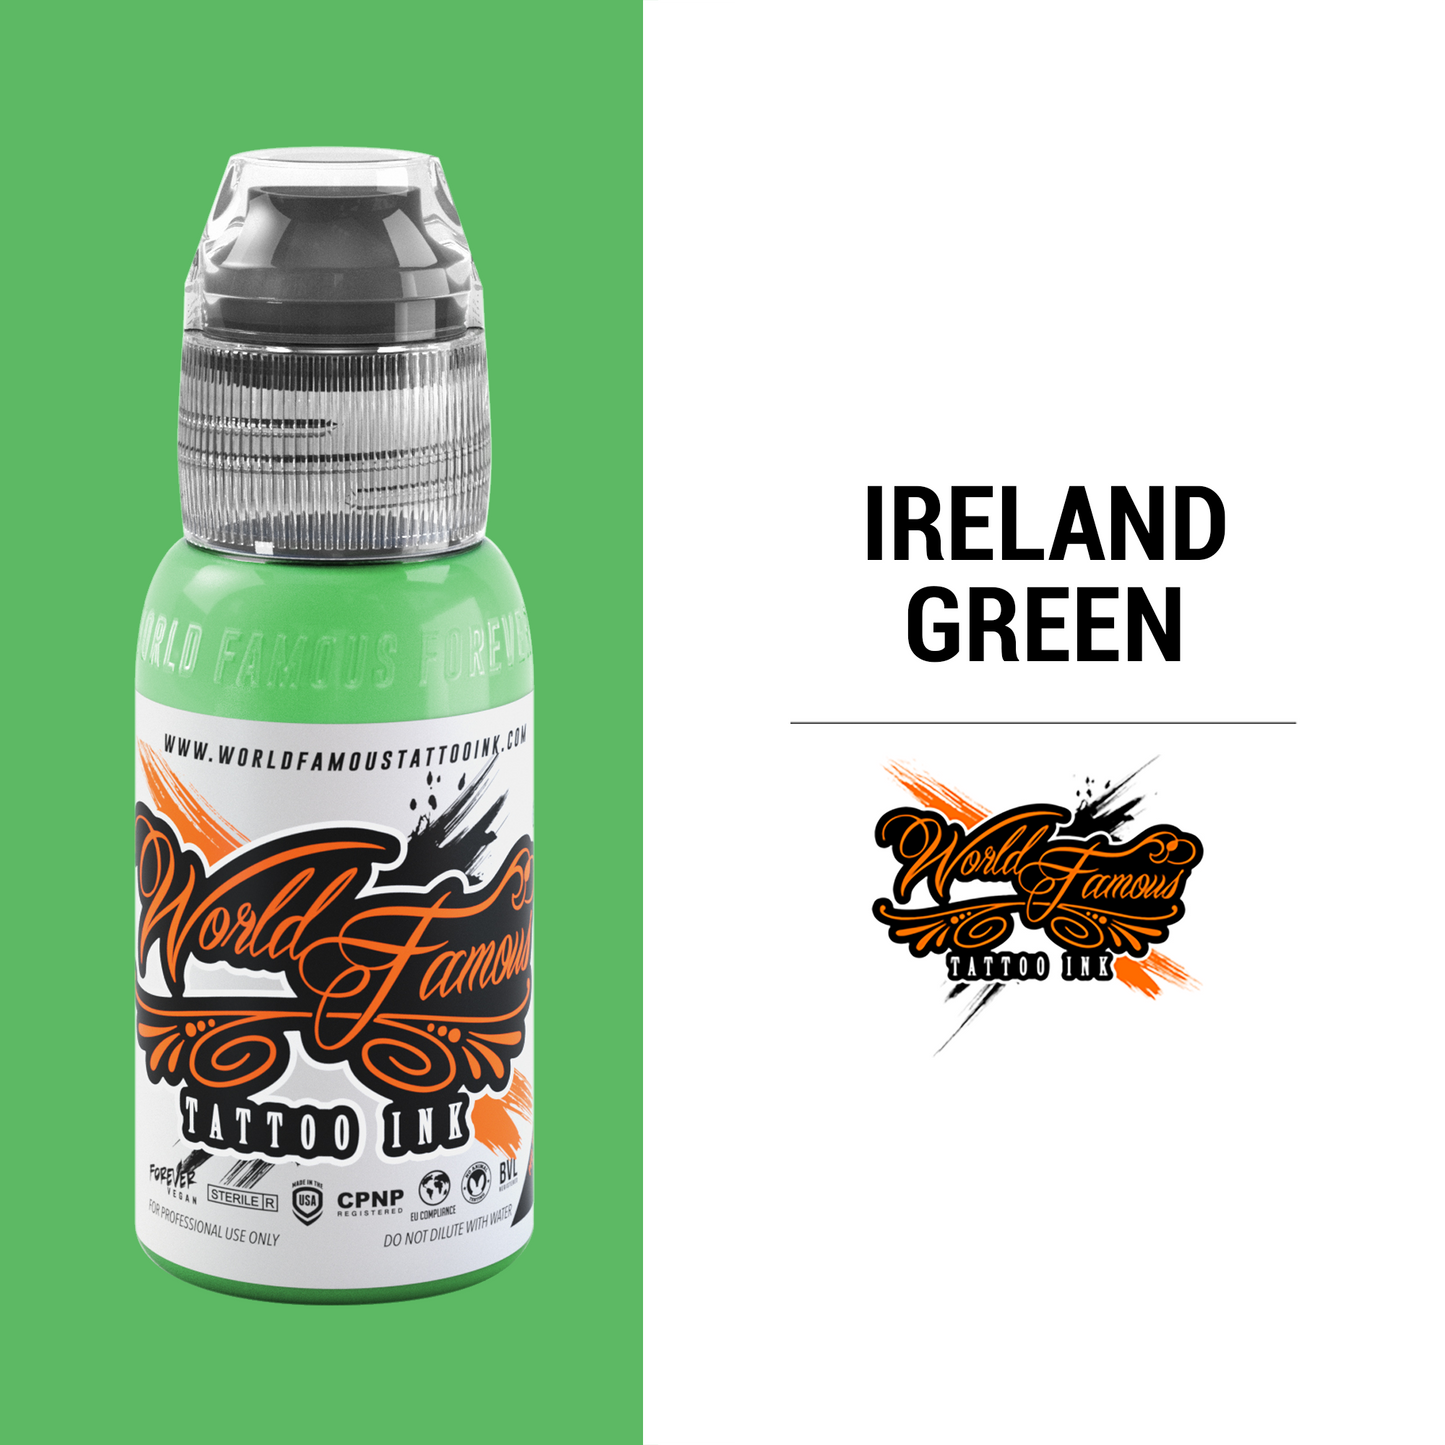 Ireland Green | World Famous Tattoo Ink